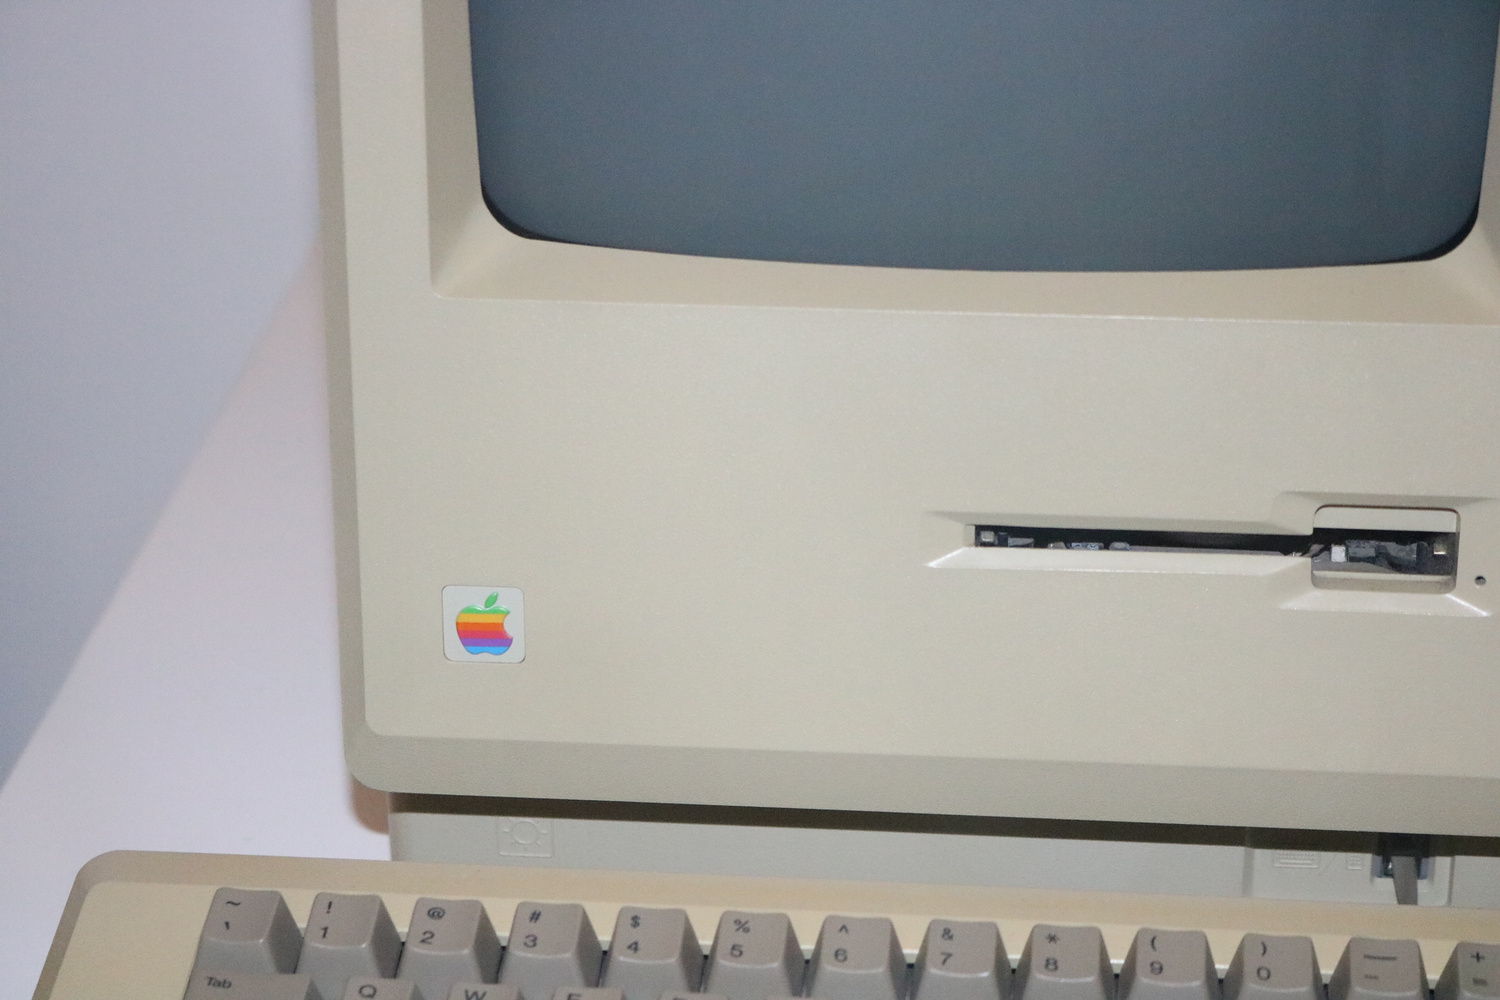 close-up of Apple Macintosh